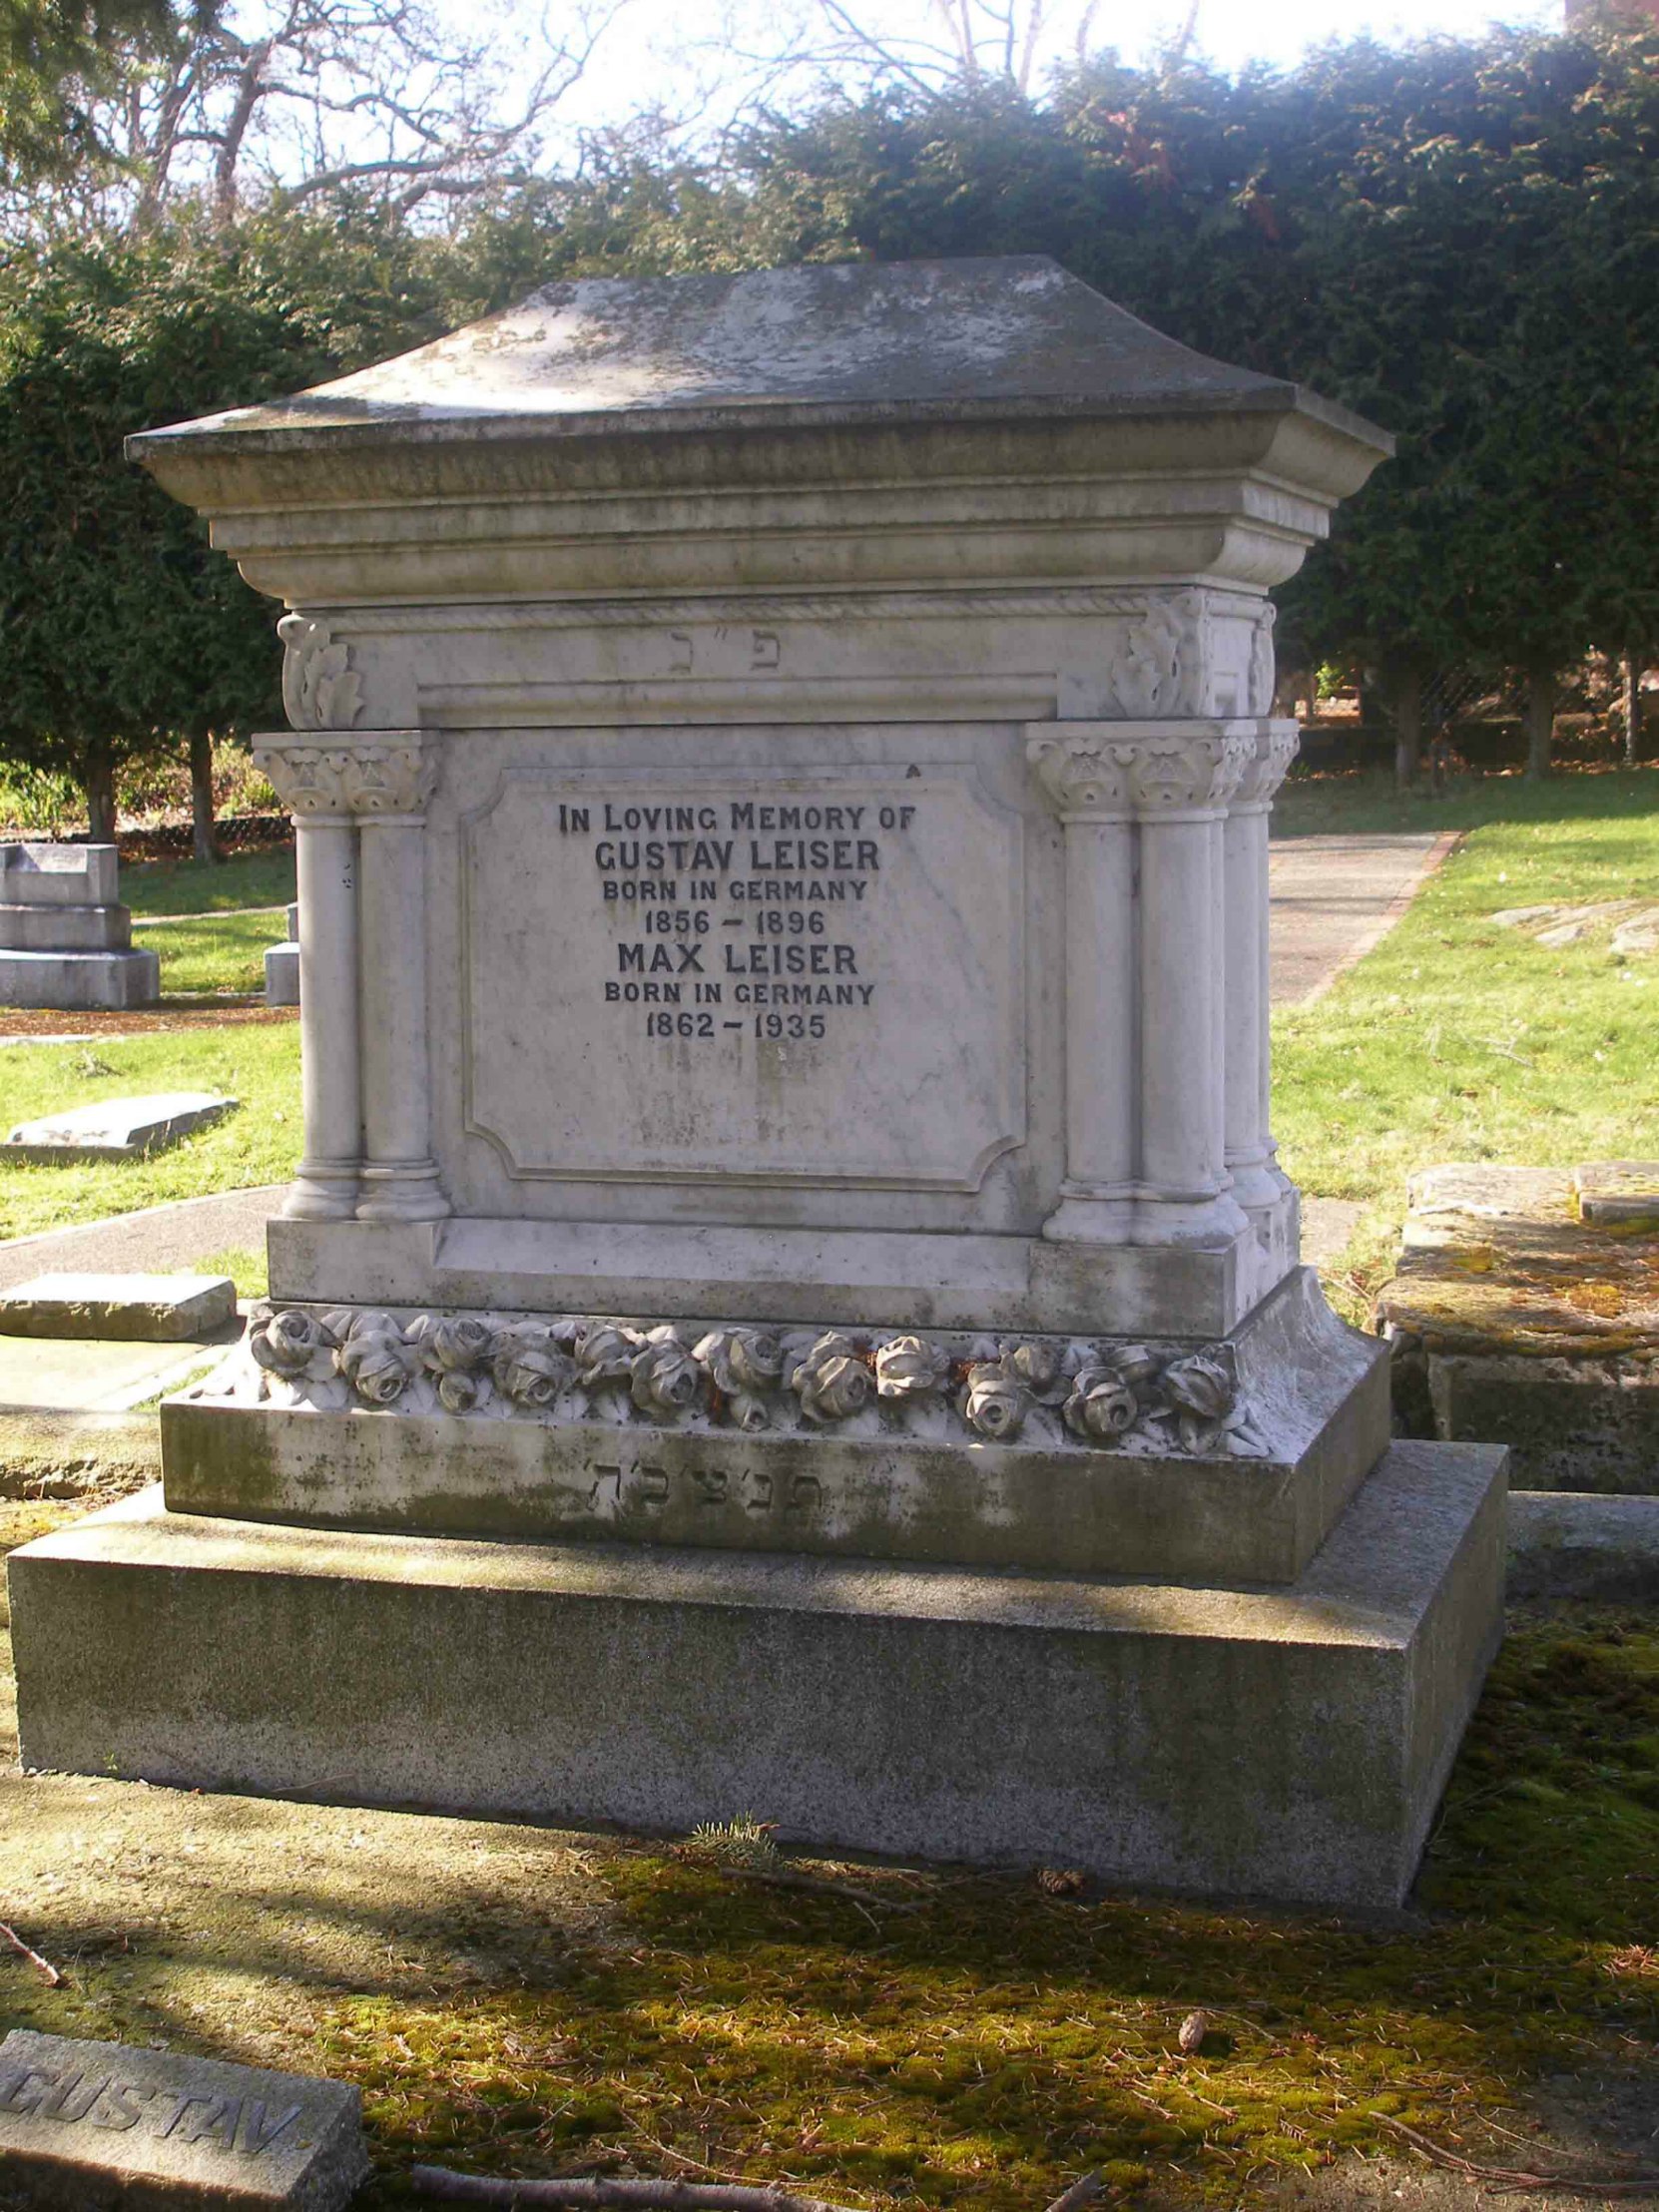 Grave marker of Gustav Leiser (1856-1896) and Max Leiser (1862-1935) in Victoria Jewish Cemetery, Victoria, B.C.